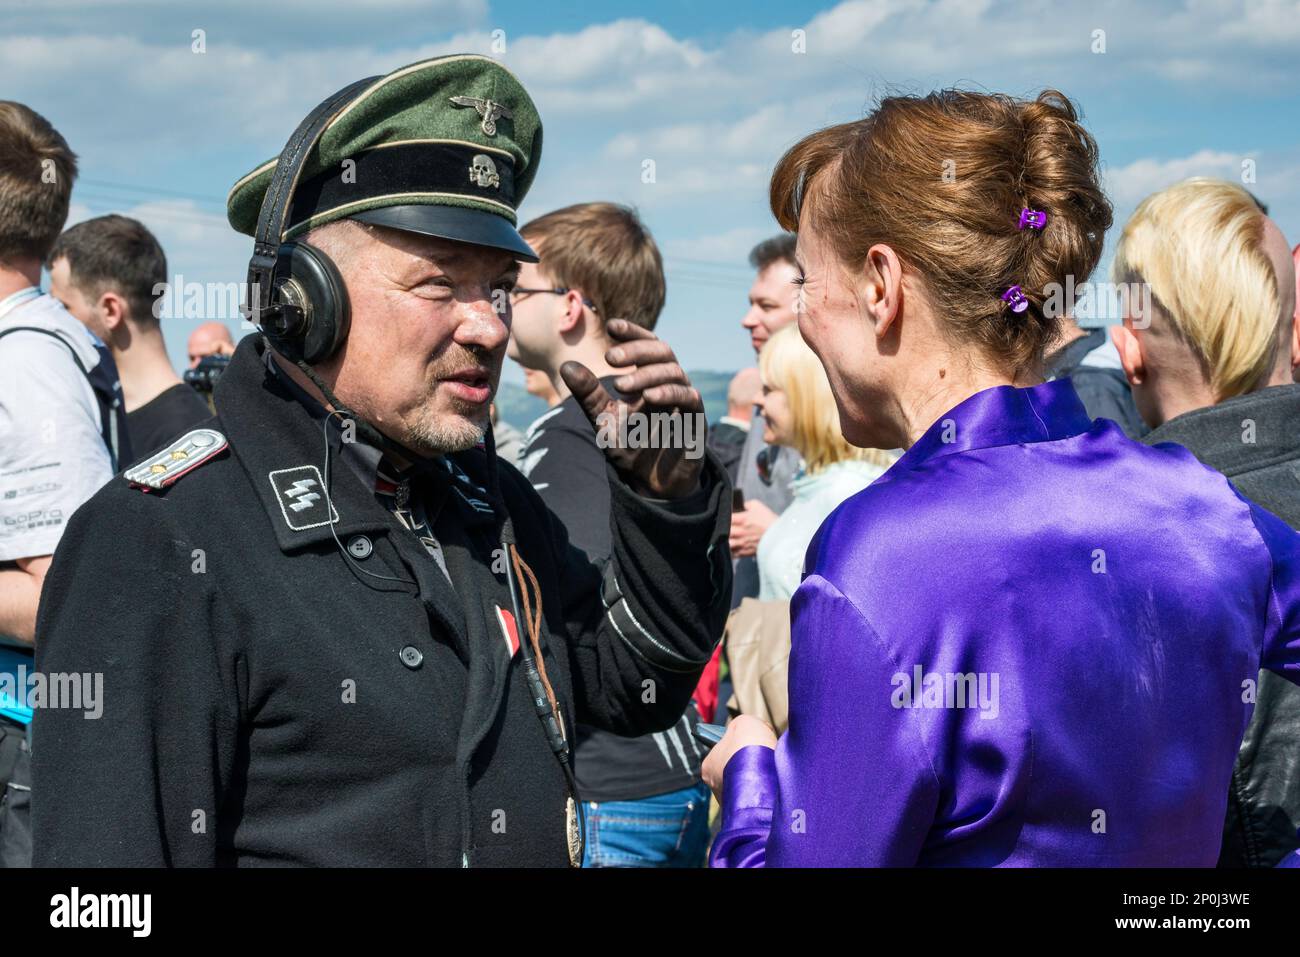 Reenactor in Waffen-SS German uniform, tank driver, woman spectator, talking after reenactment of WW2 battle, Jelenia Gora, Lower Silesia, Poland Stock Photo